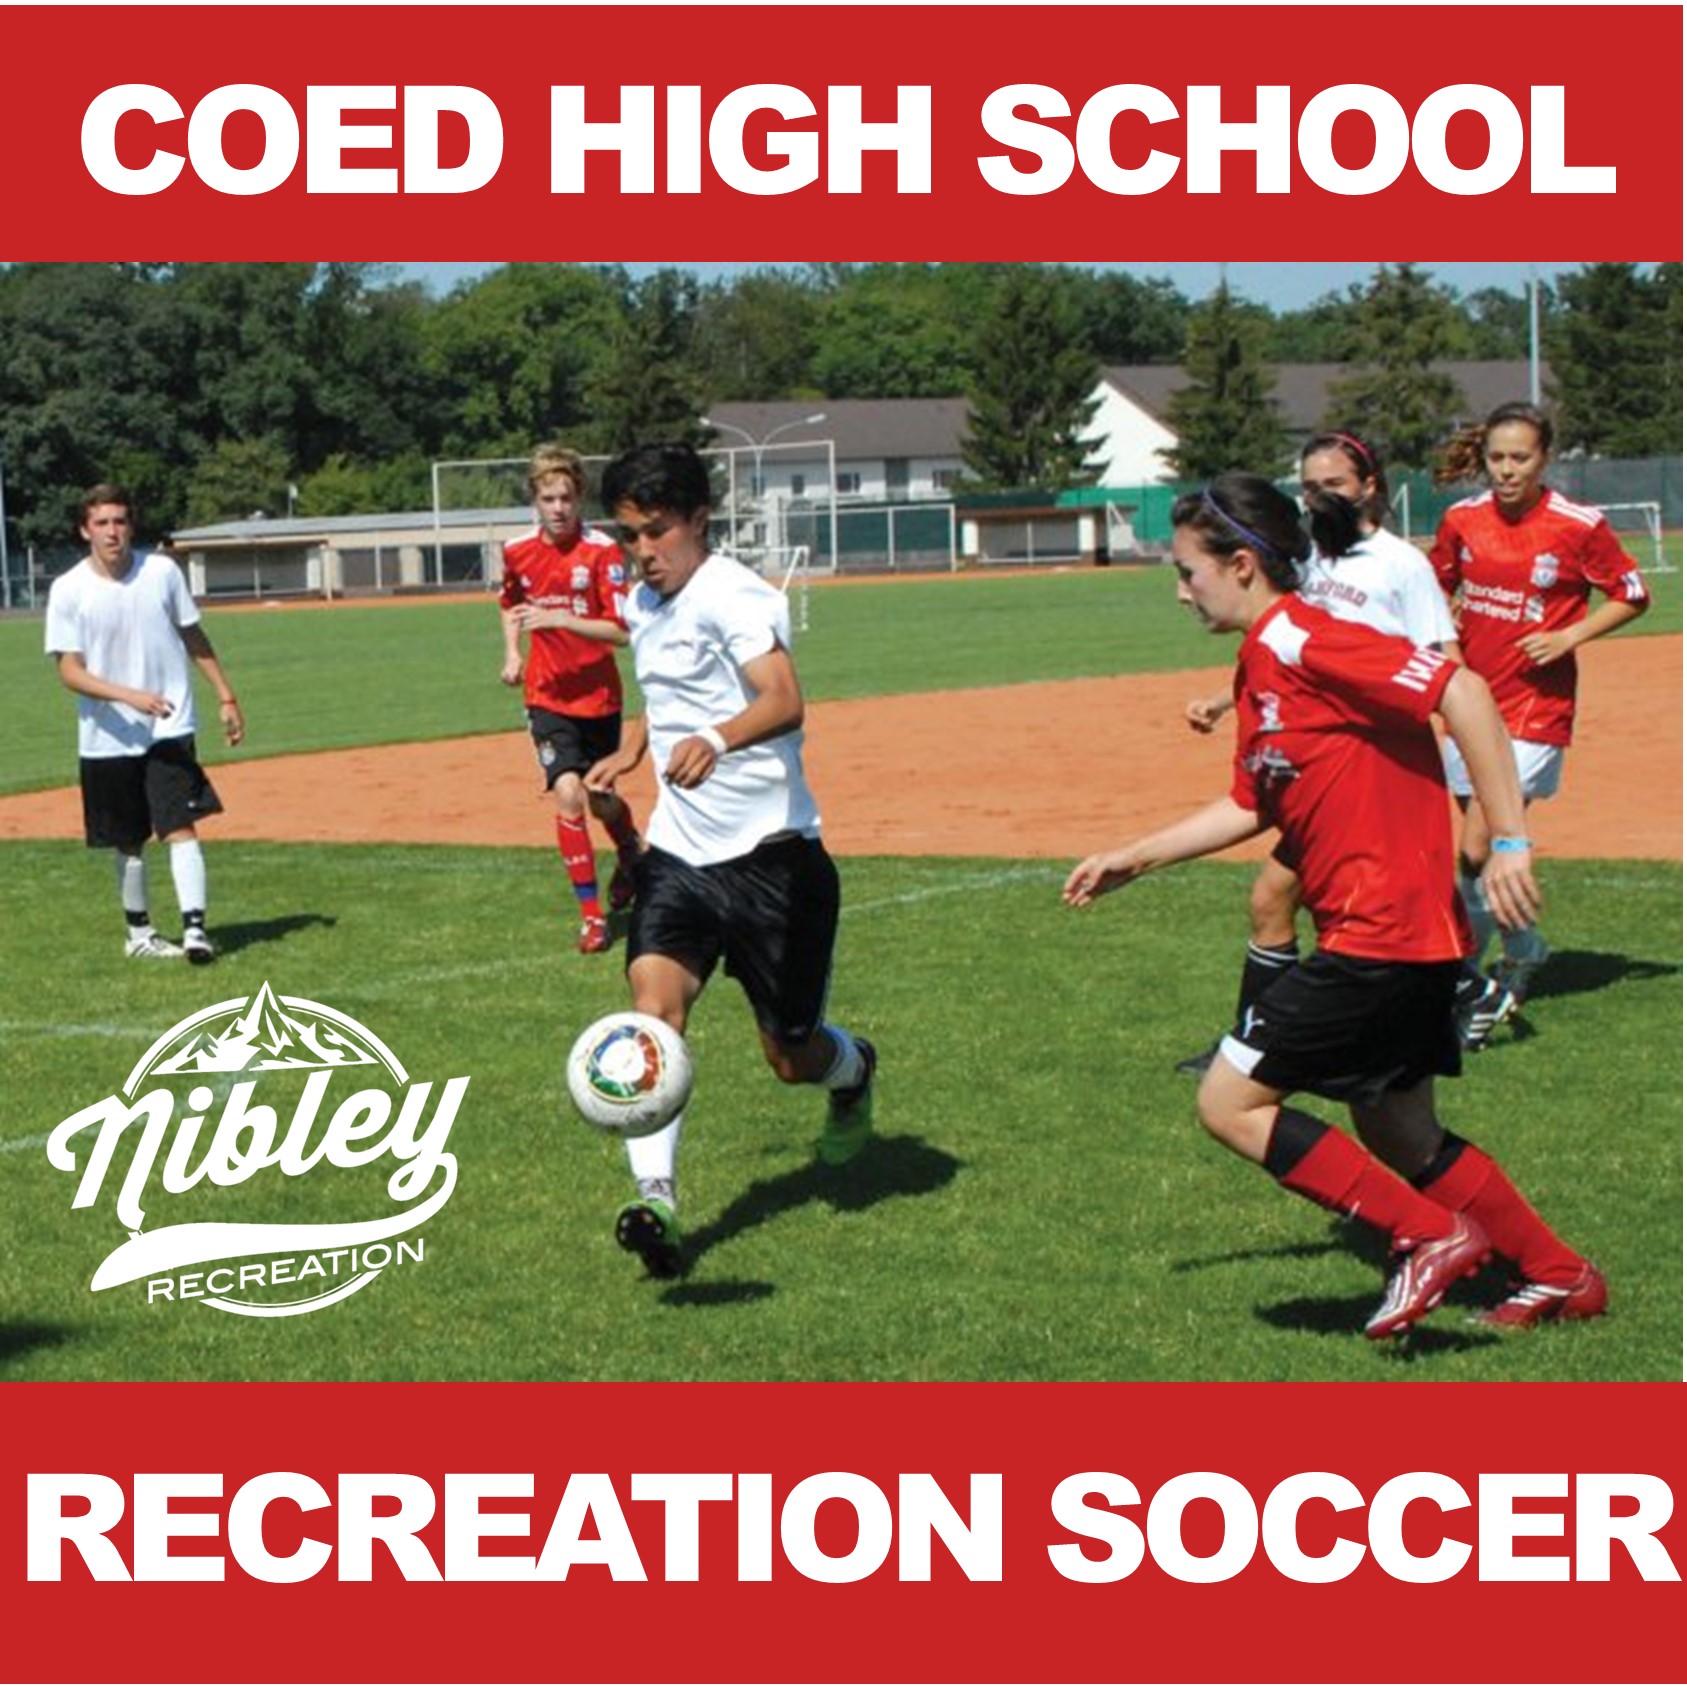 Coed High School Recreation Soccer